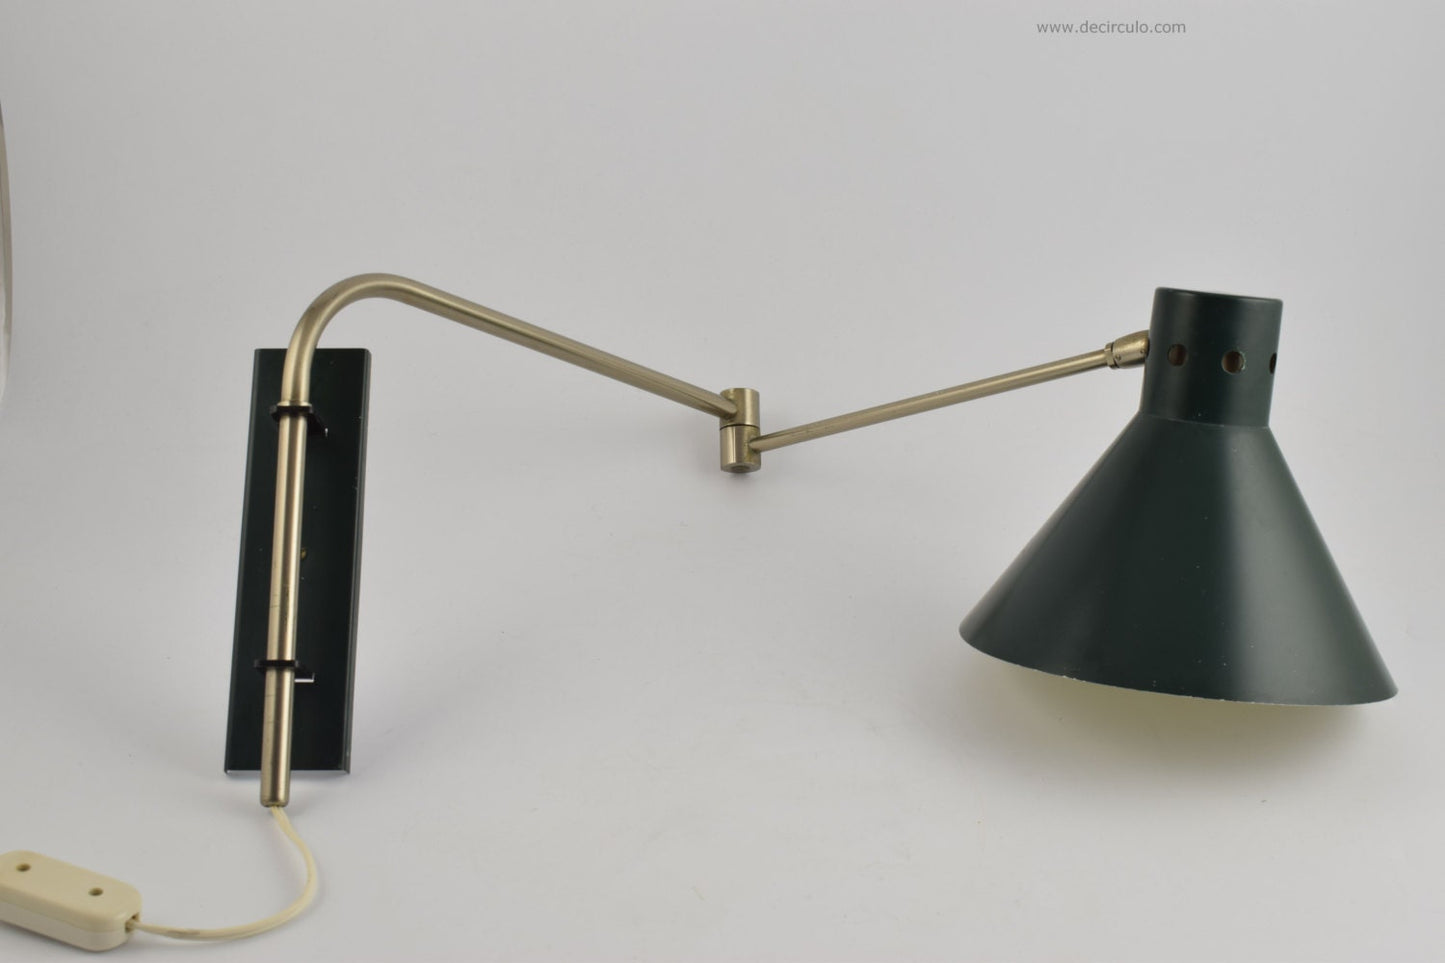 Swing wall light artimeta, dark green swing wall lamp from dutch design firm artimeta